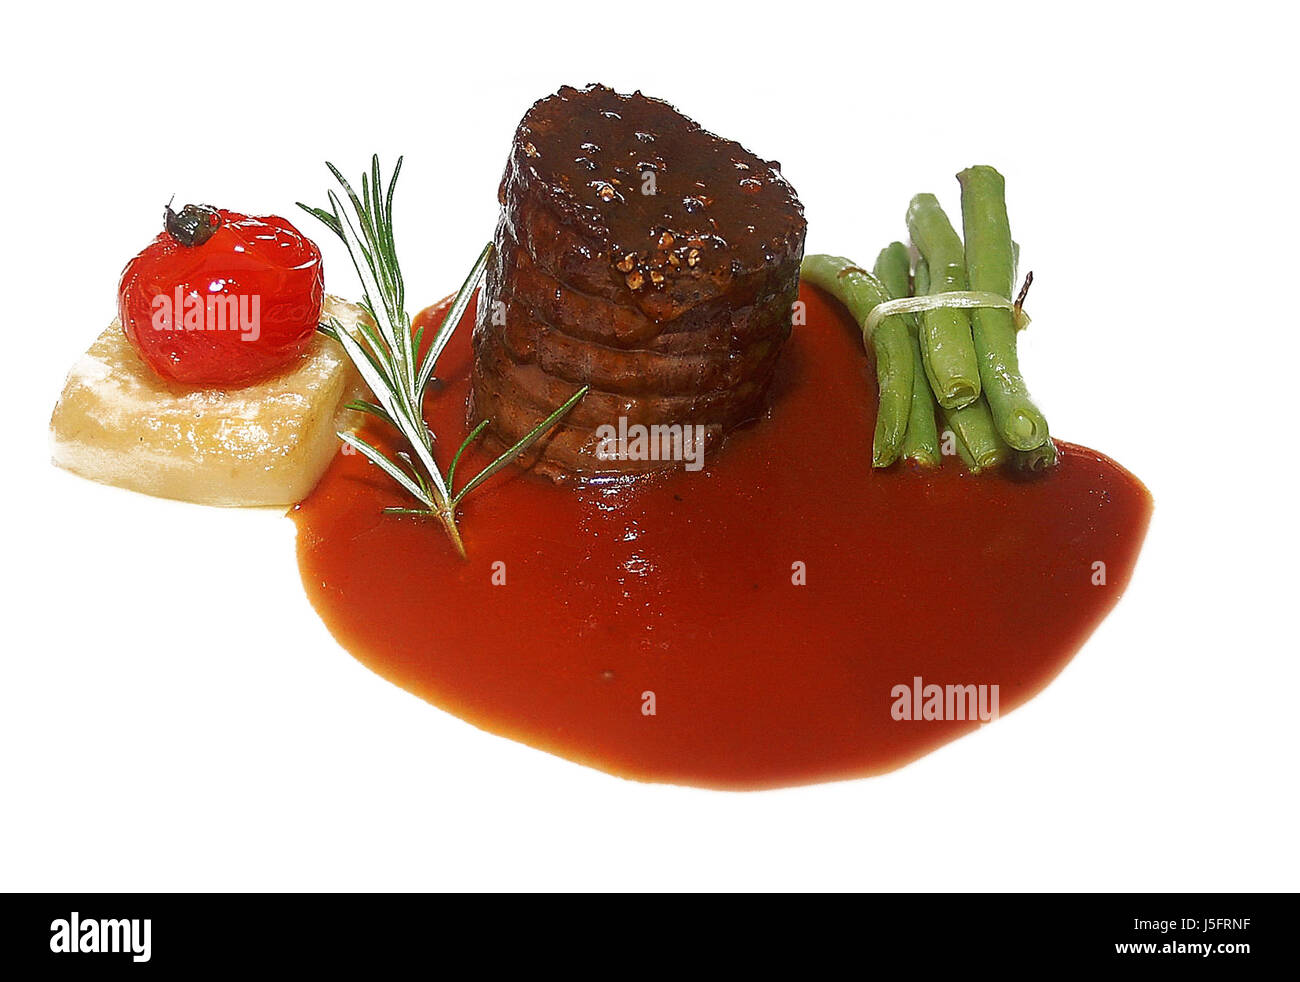 hunger beans bovine food dish meal fillet menu sauce display rosemary port wine Stock Photo